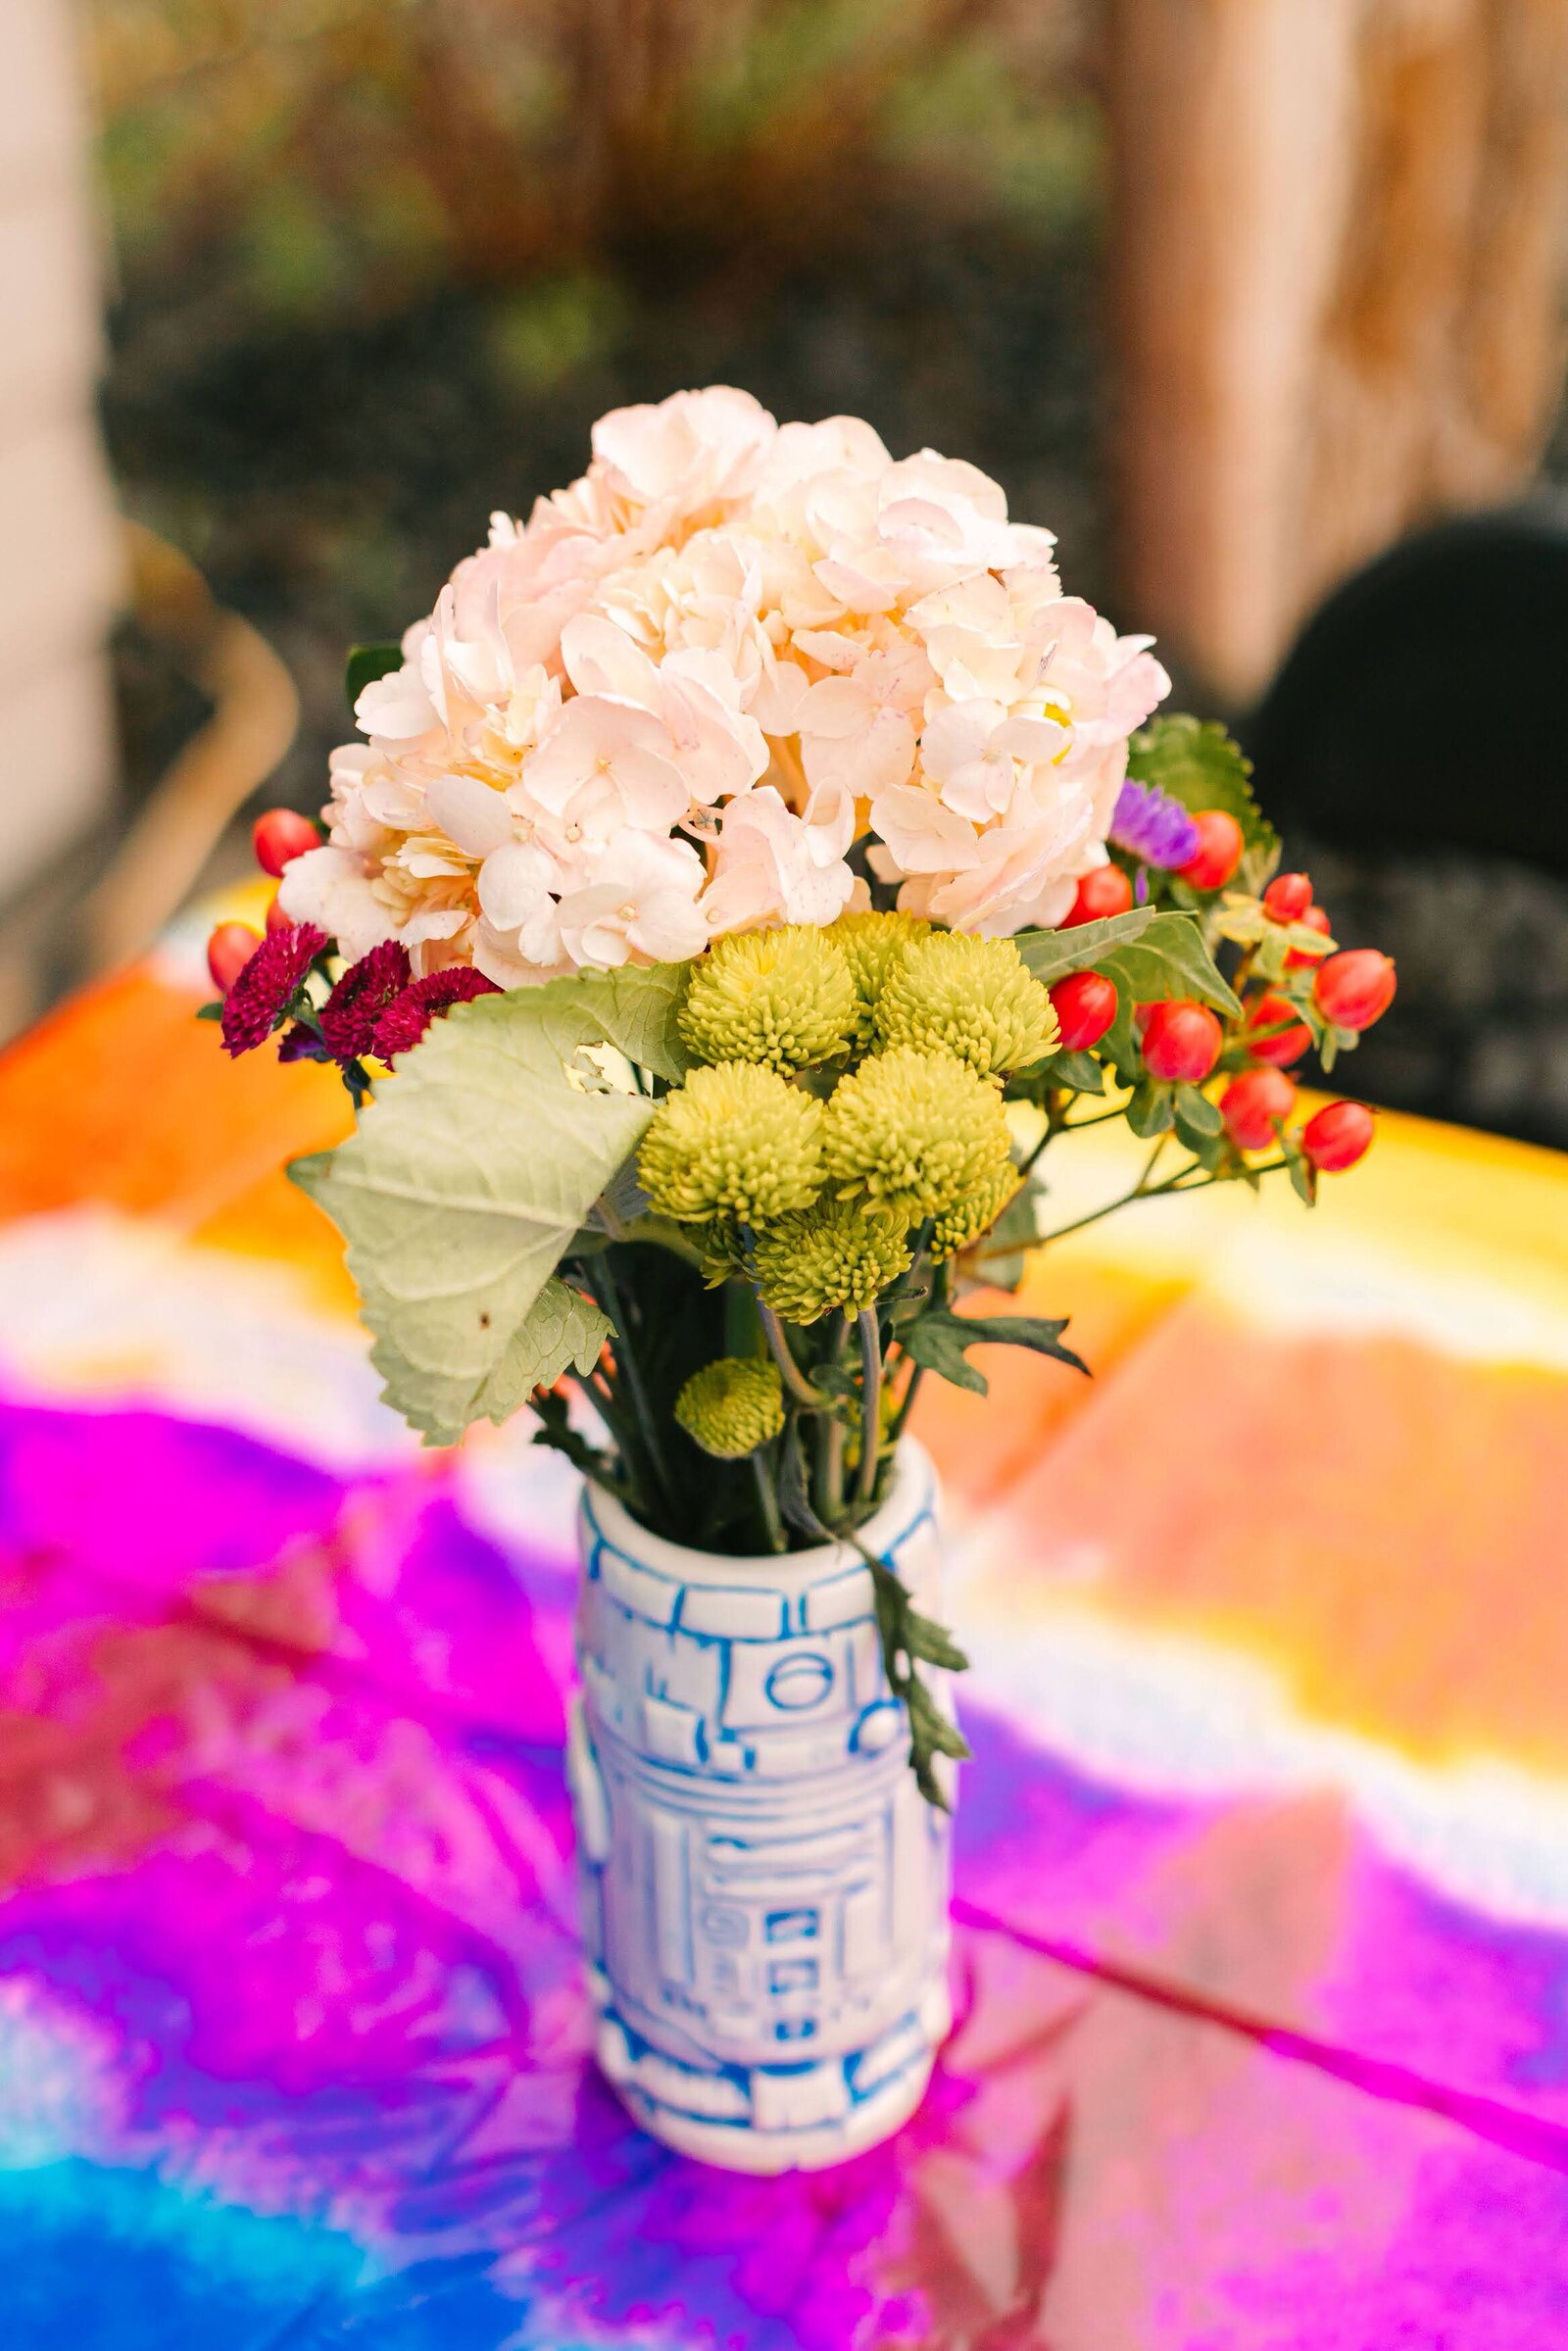 A small flower arrangement on a tie dye tablecloth.